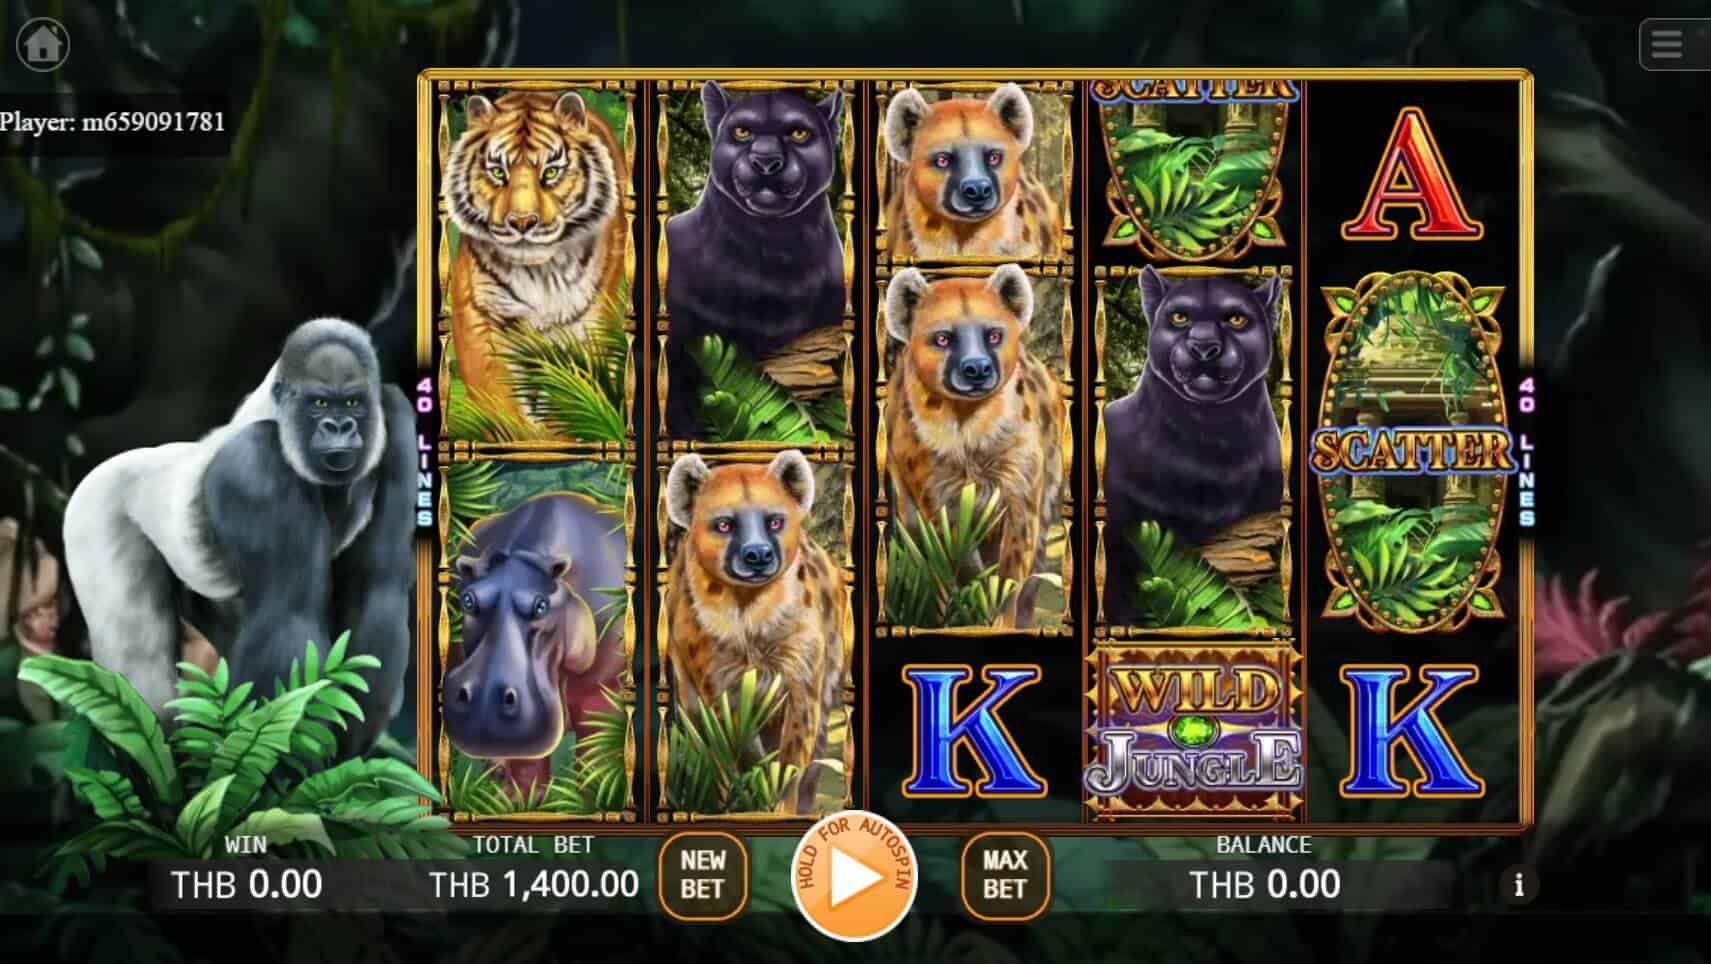 Wild Jungle KAGaming joker123